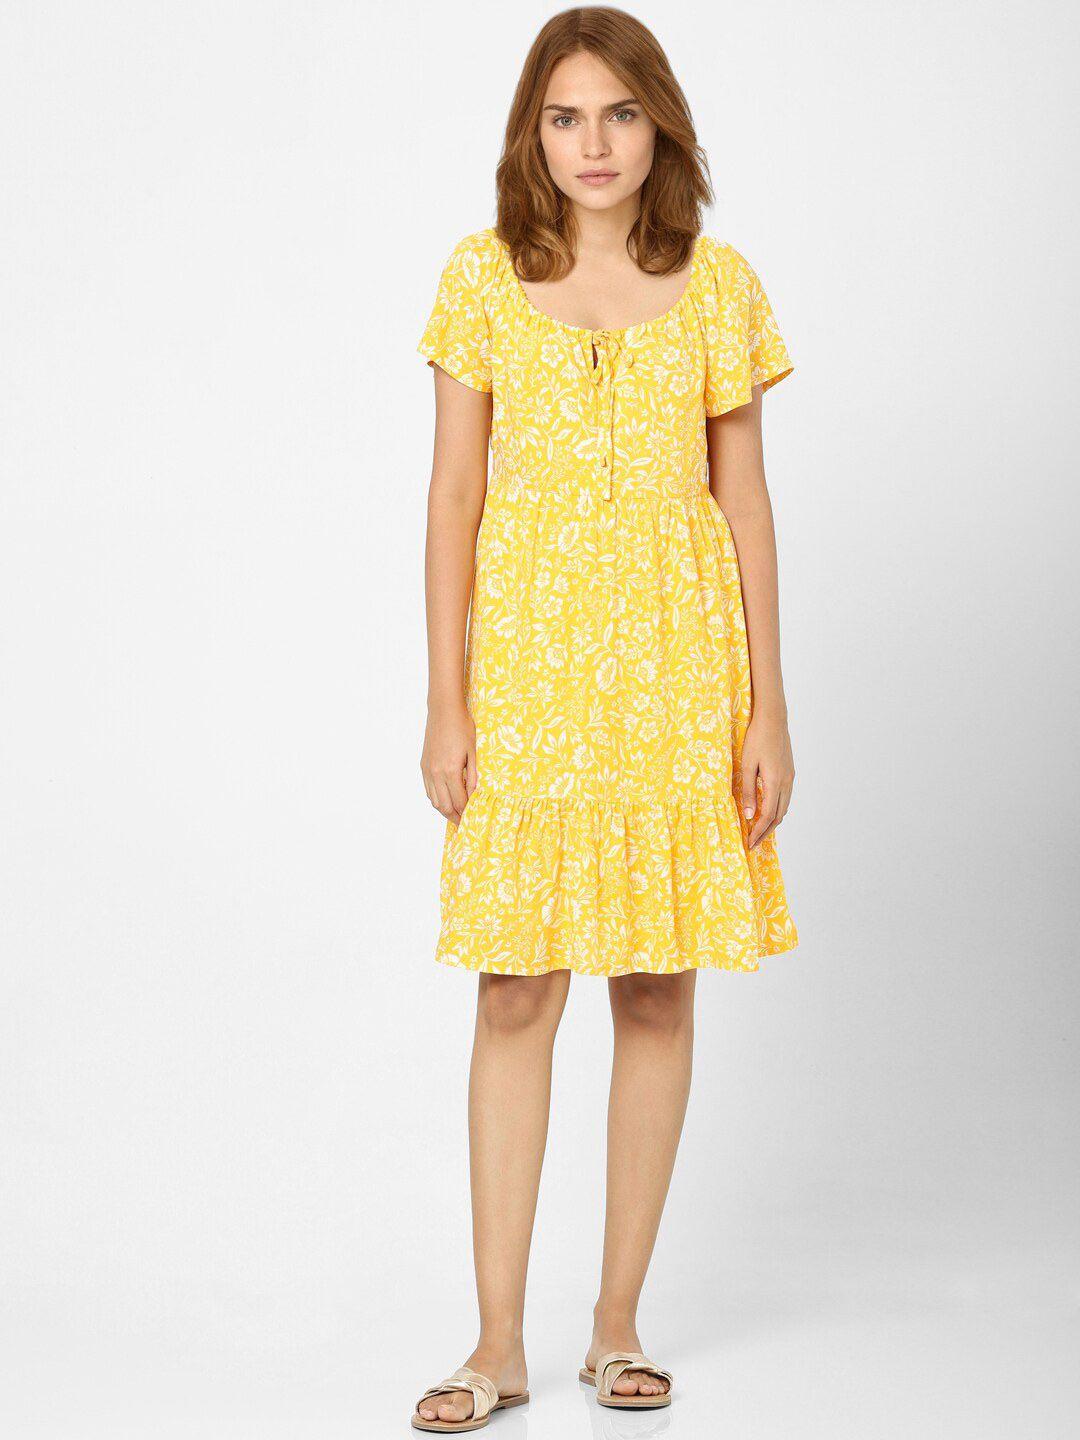 vero moda yellow floral a-line dress